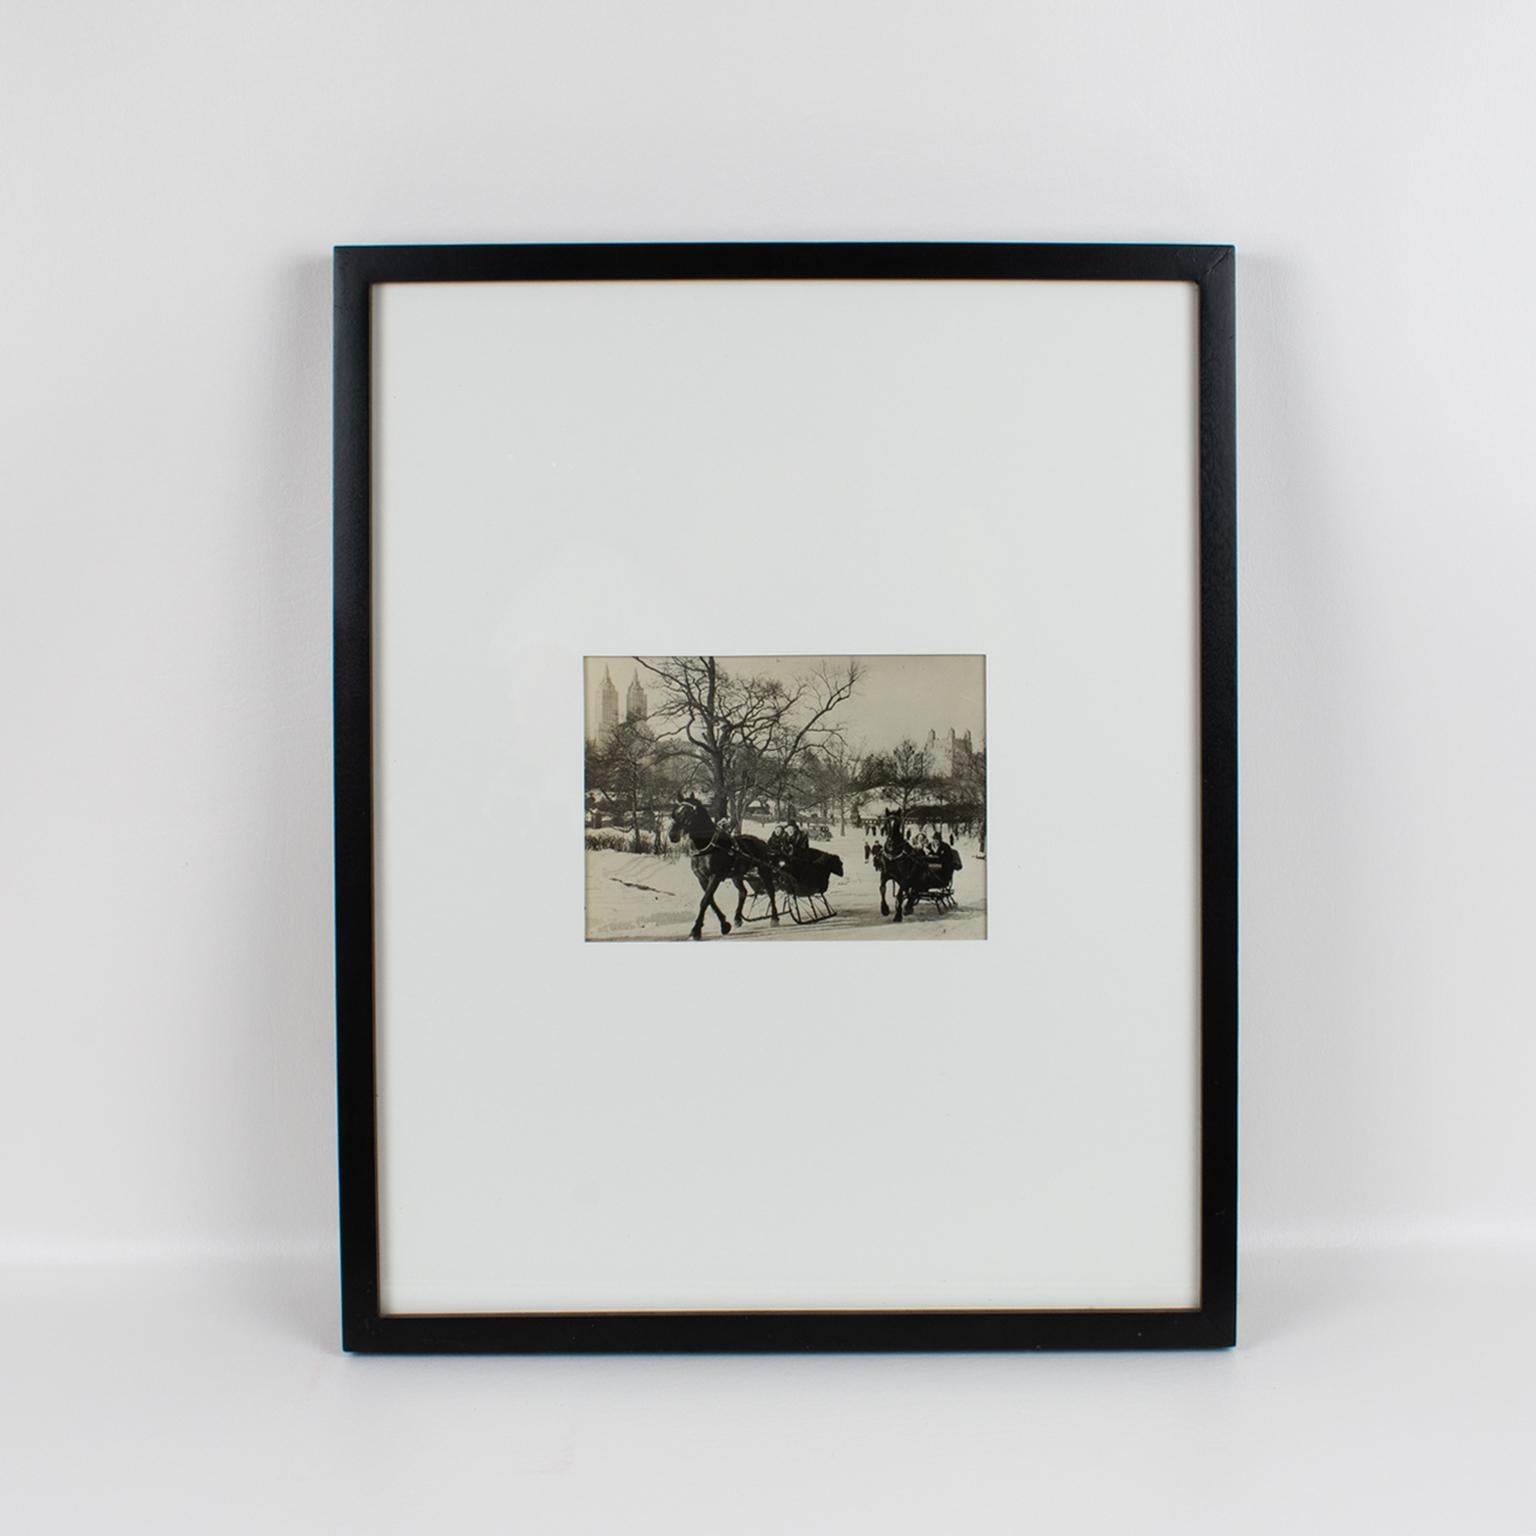 Sled Race in Central Park, 1934 Silver Gelatin Black-White Photography Framed For Sale 4